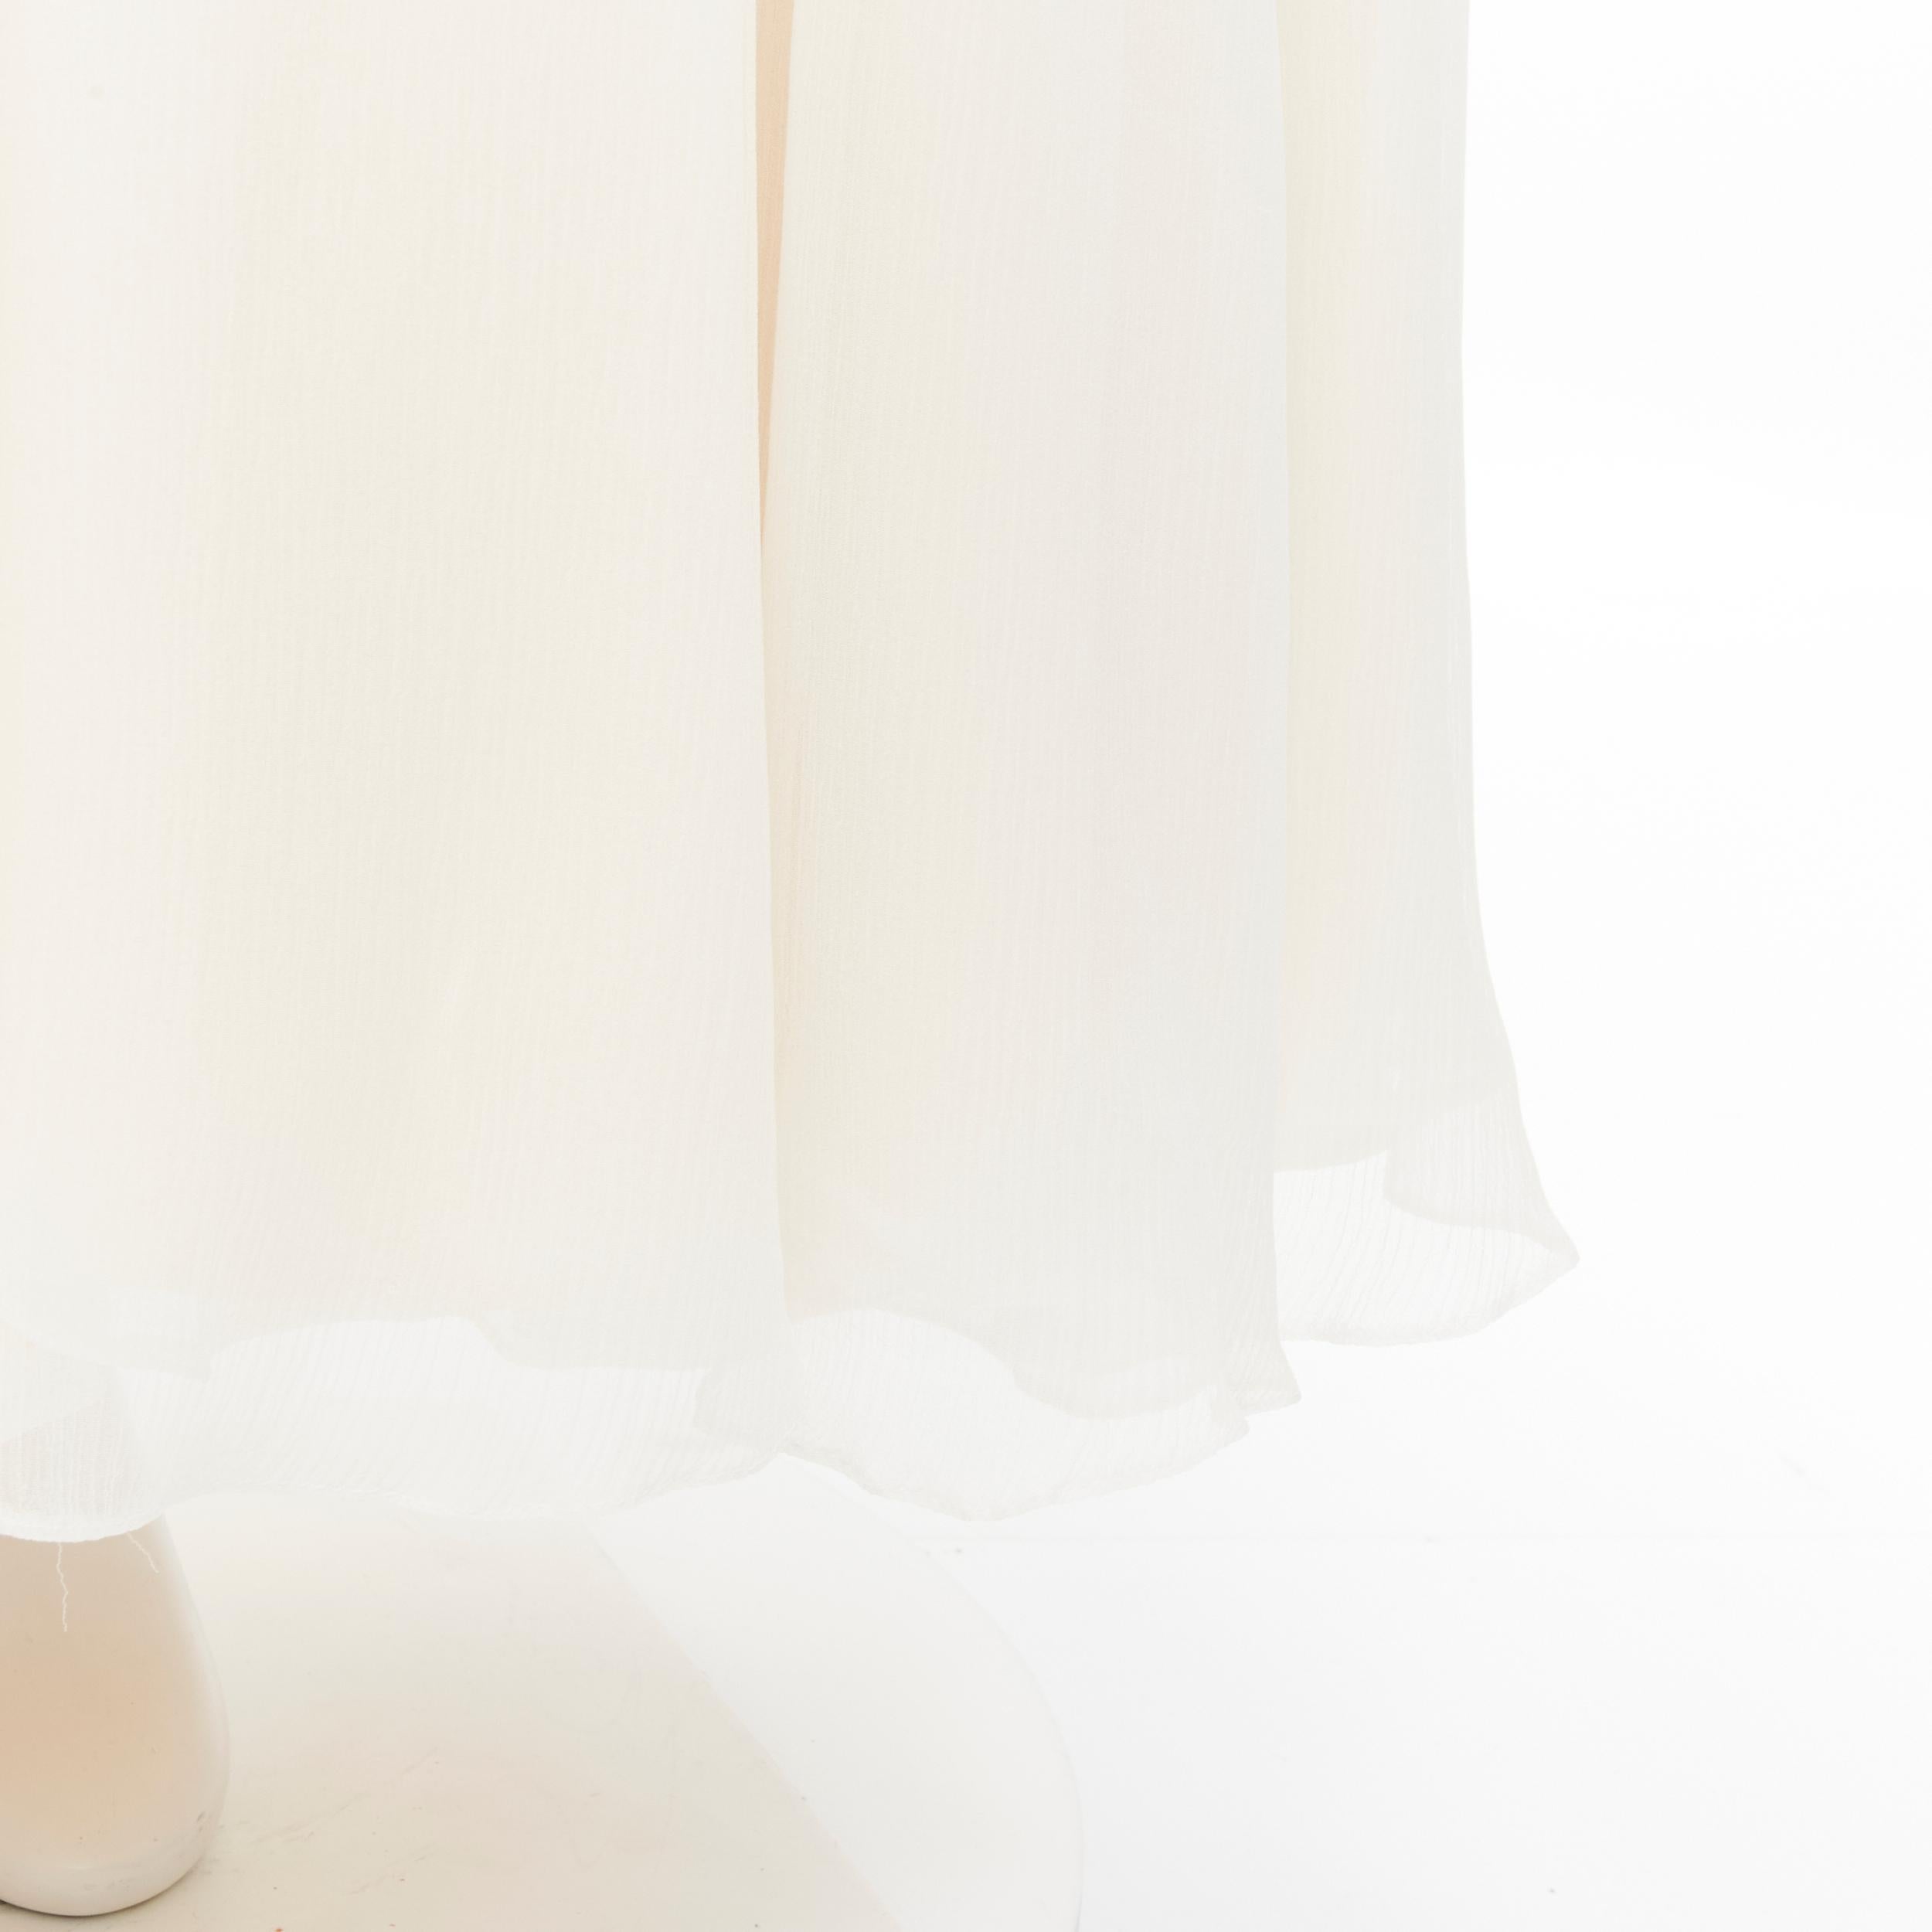 OSCAR DE LA RENTA ivory white boned corset strapless evening gown dress US0 XS 2